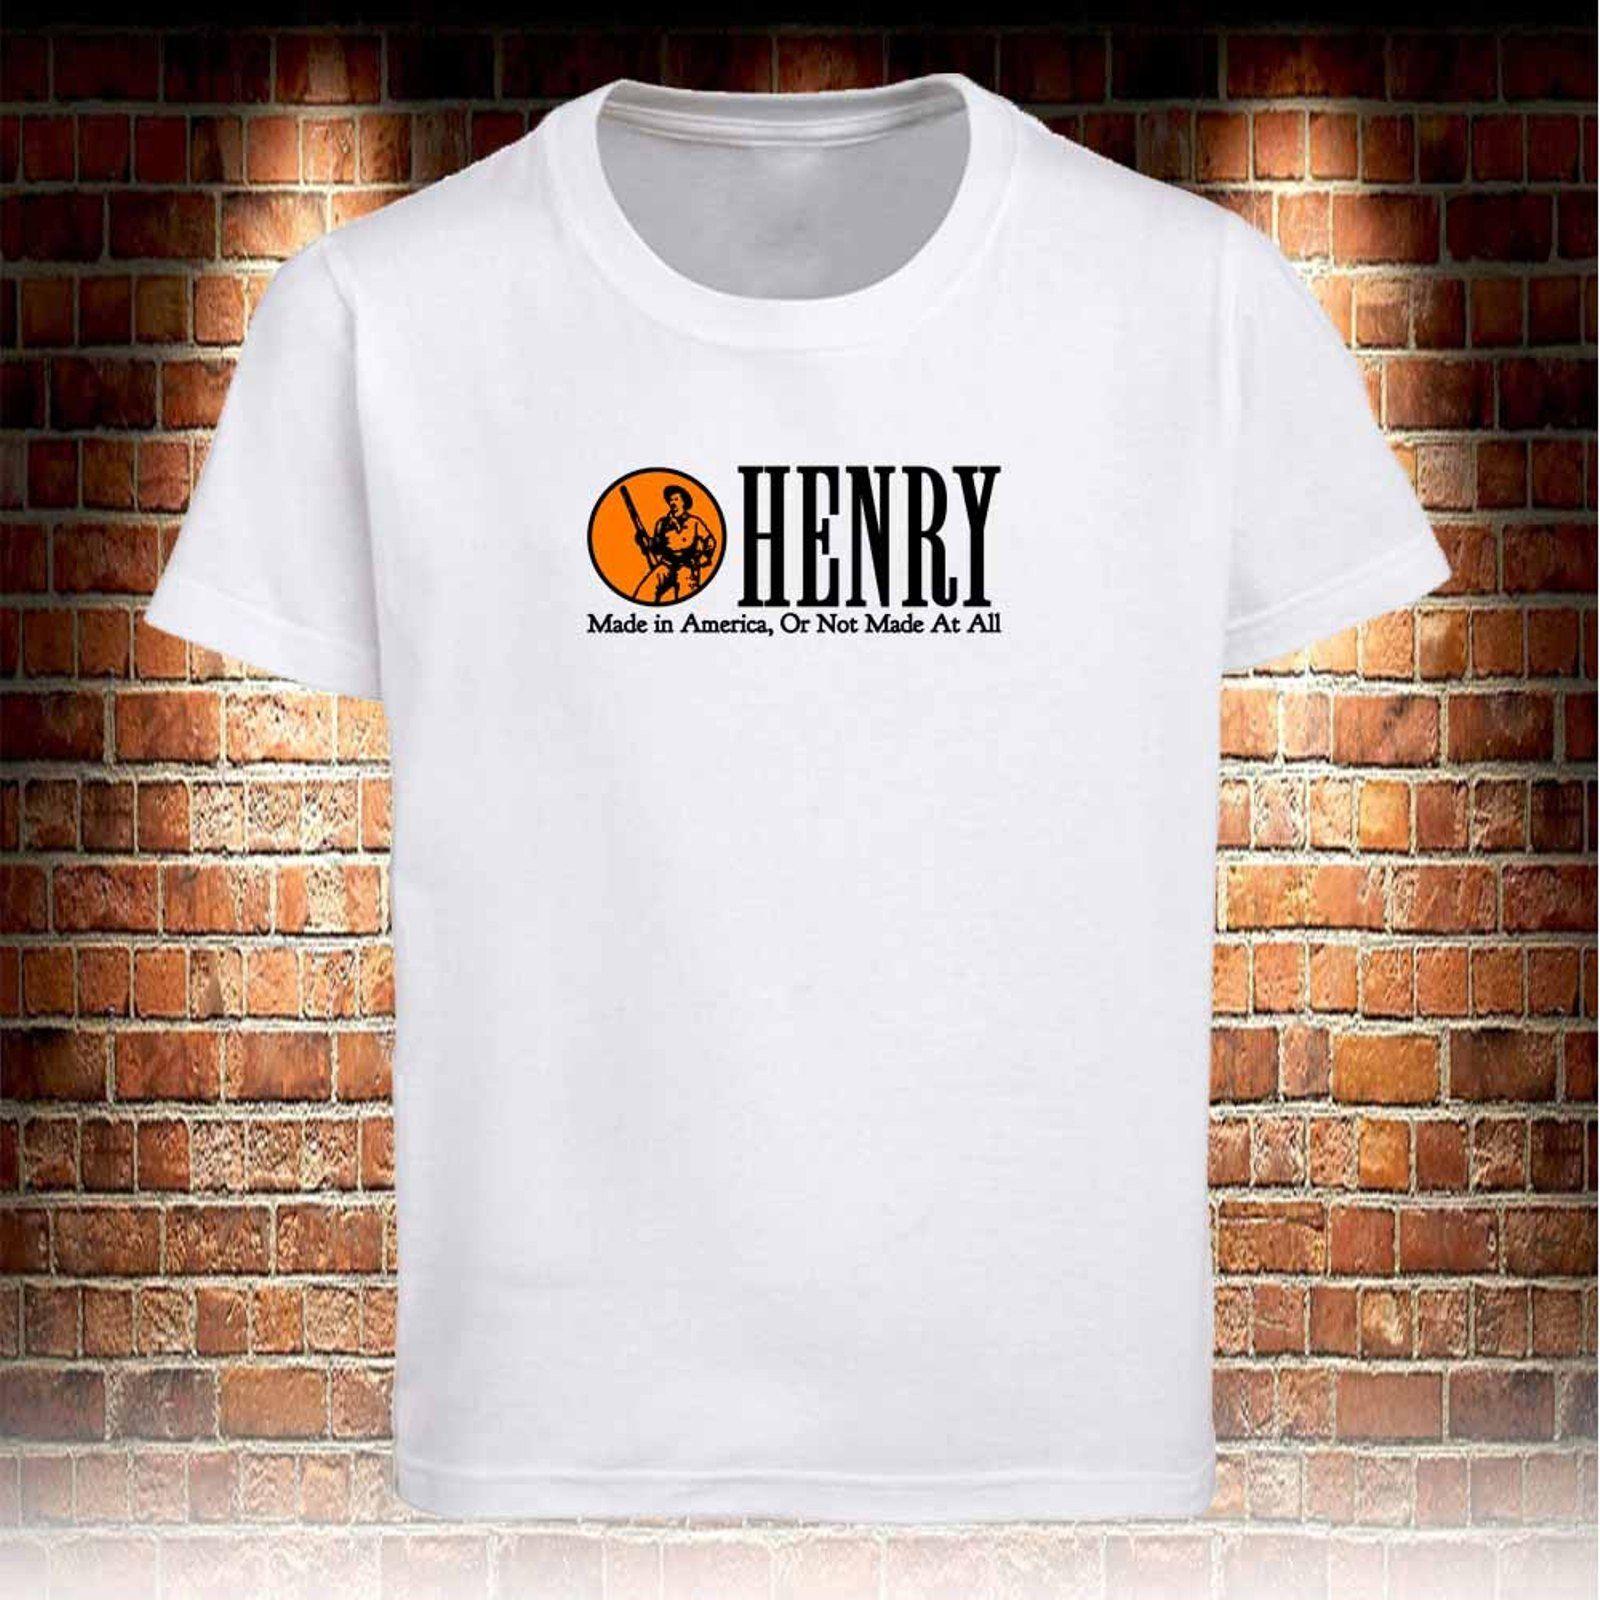 Henry Repeating Arms Logo - Henry Repeating Arms Firearms Logo White T Shirt Men'S Tshirt S To ...